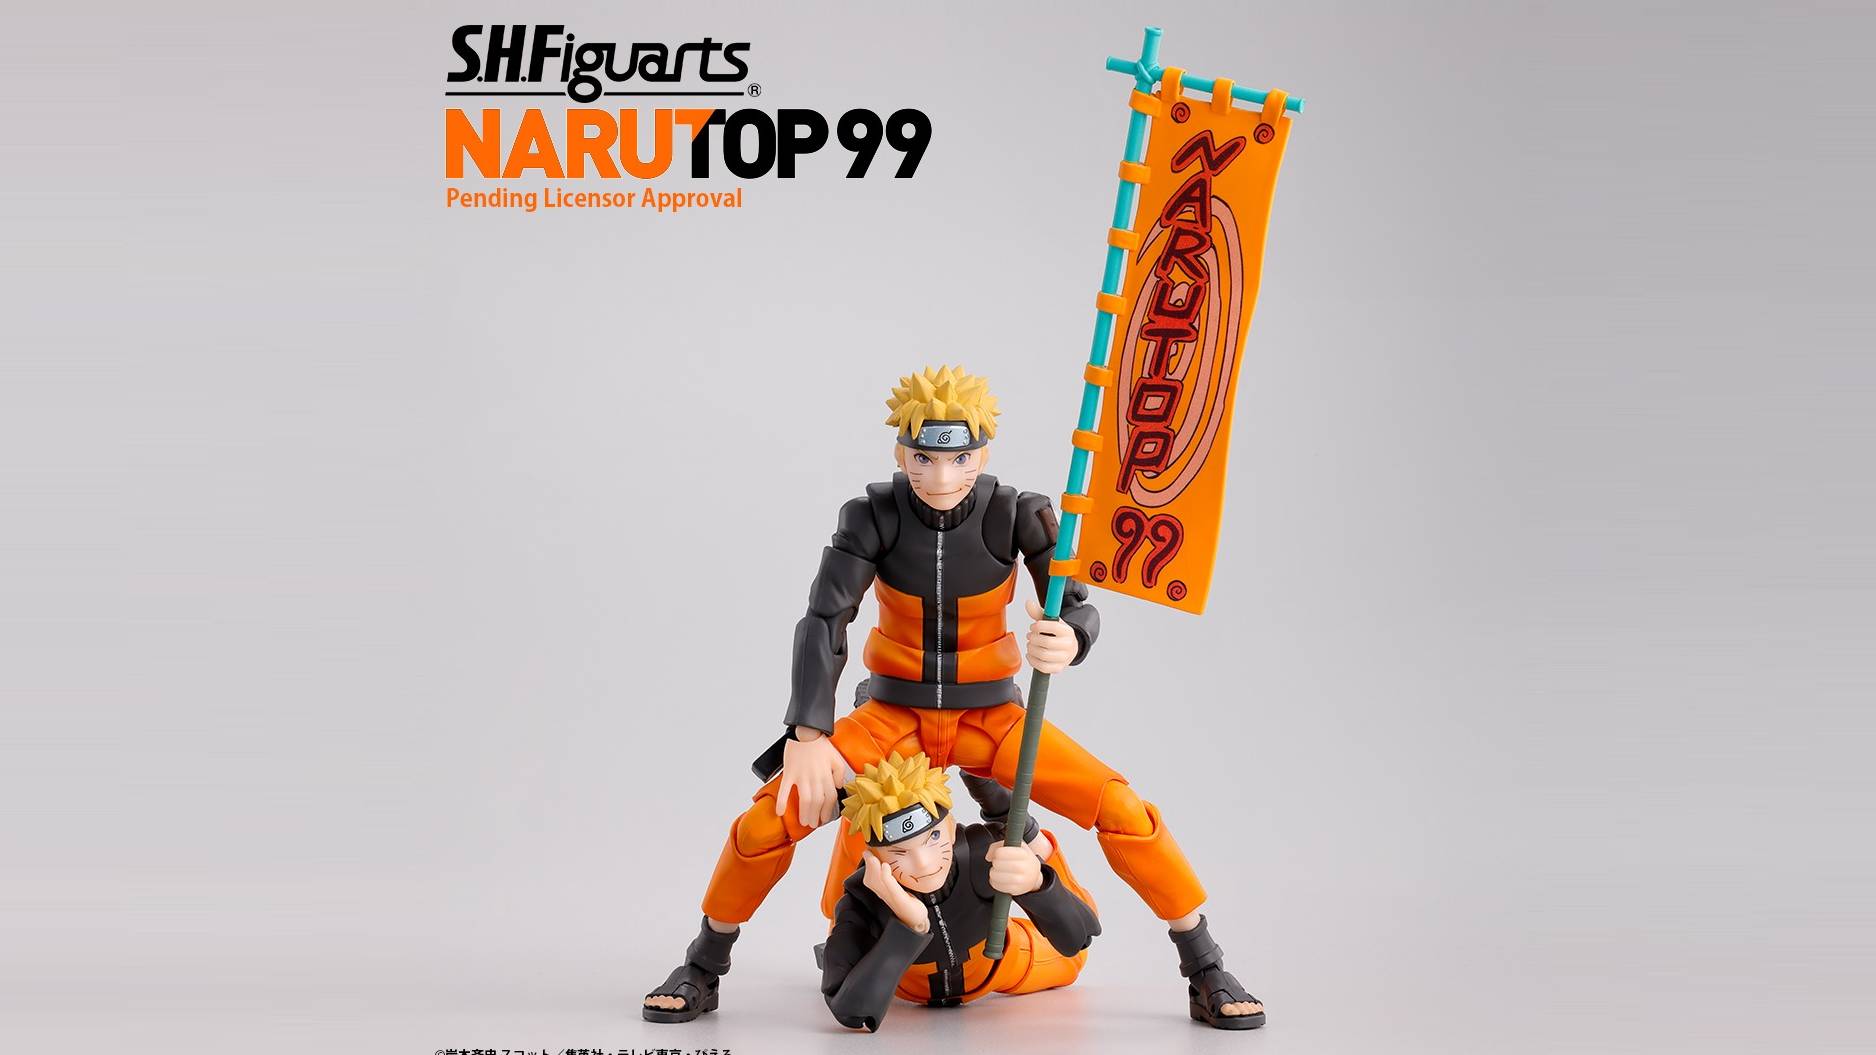 SH Figuarts Narutop 99 Character Poll Naruto Figures Coming Soon - Game  News 24